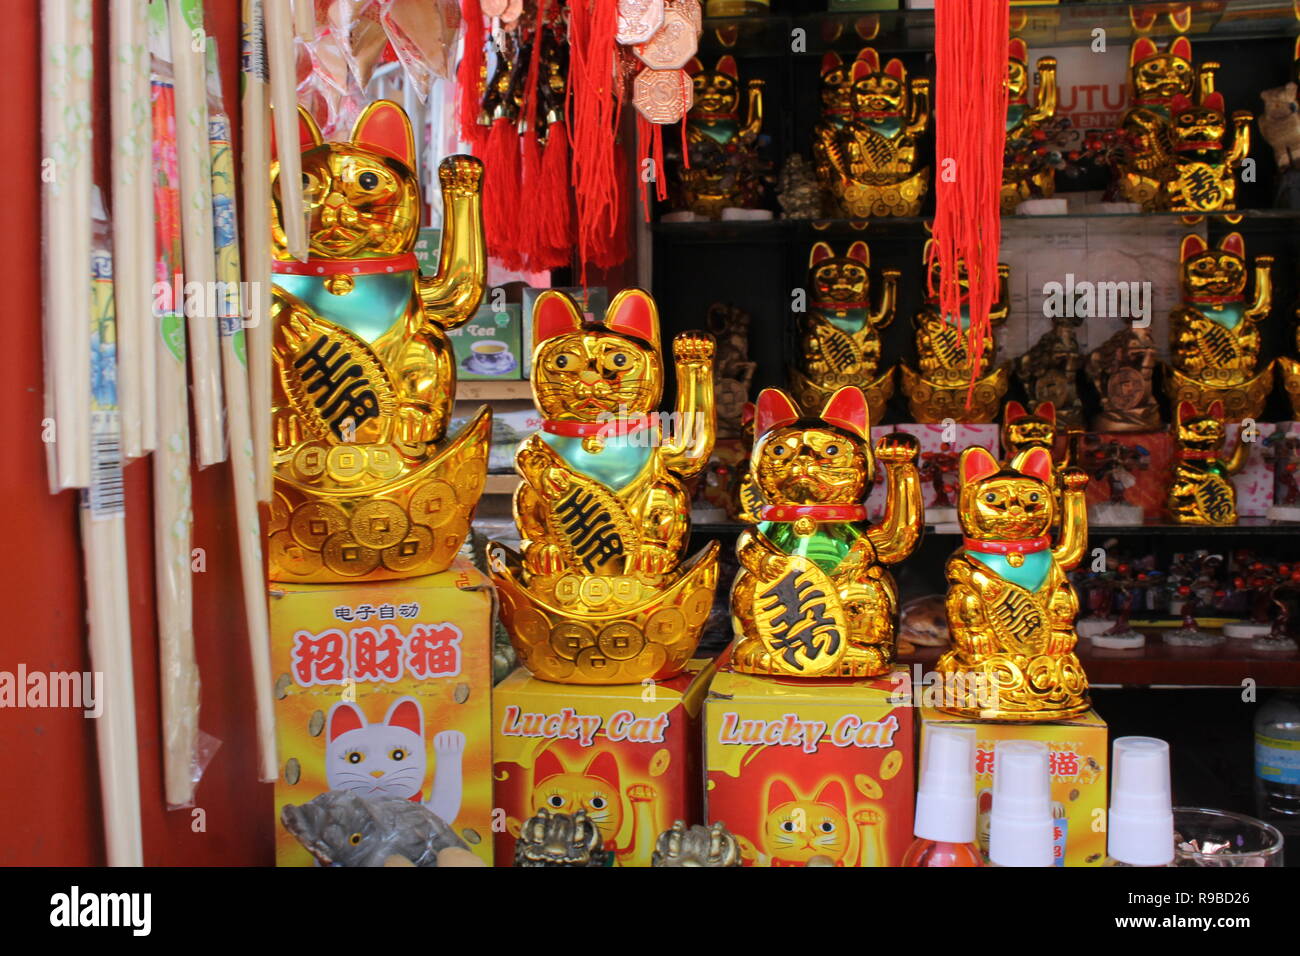 Boutique de souvenirs chinois en décrochage // Latam puesto de tienda de souvenirs chinos en Latinoamérica Banque D'Images